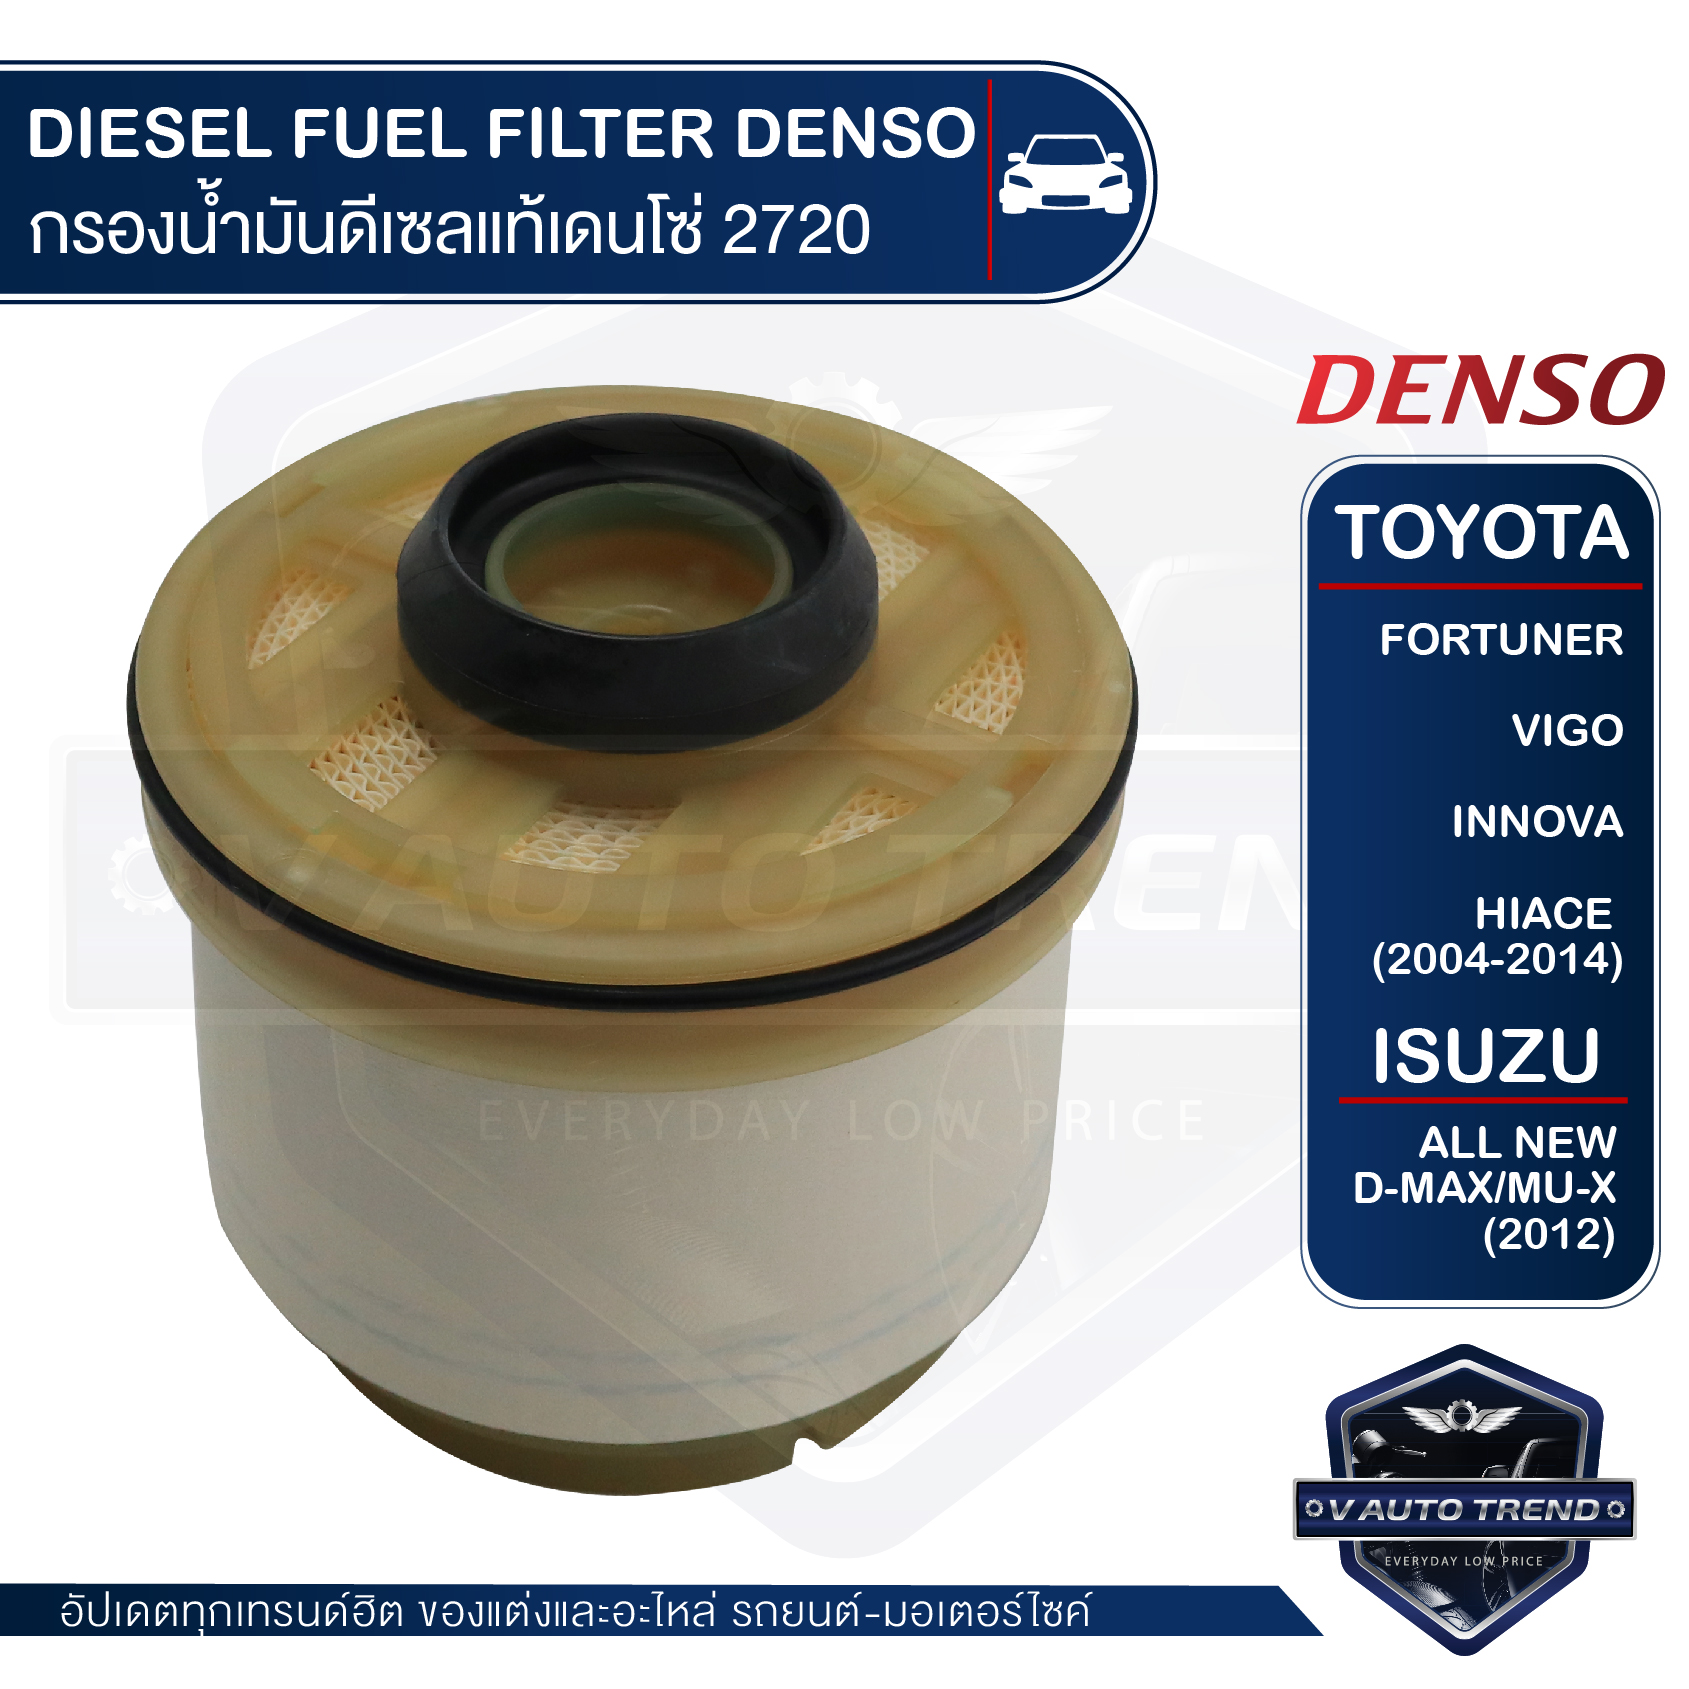 DENSO เบอร์ KS086300-2720 กรองน้ำมันดีเซล กรองโซล่า สำหรับรถยนต์ TOYOTA VIGO / FORTUNER / INNOVA / HIACE (2004-2014) / ISUZU ALL NEW D-MAX / MU-X (2012)